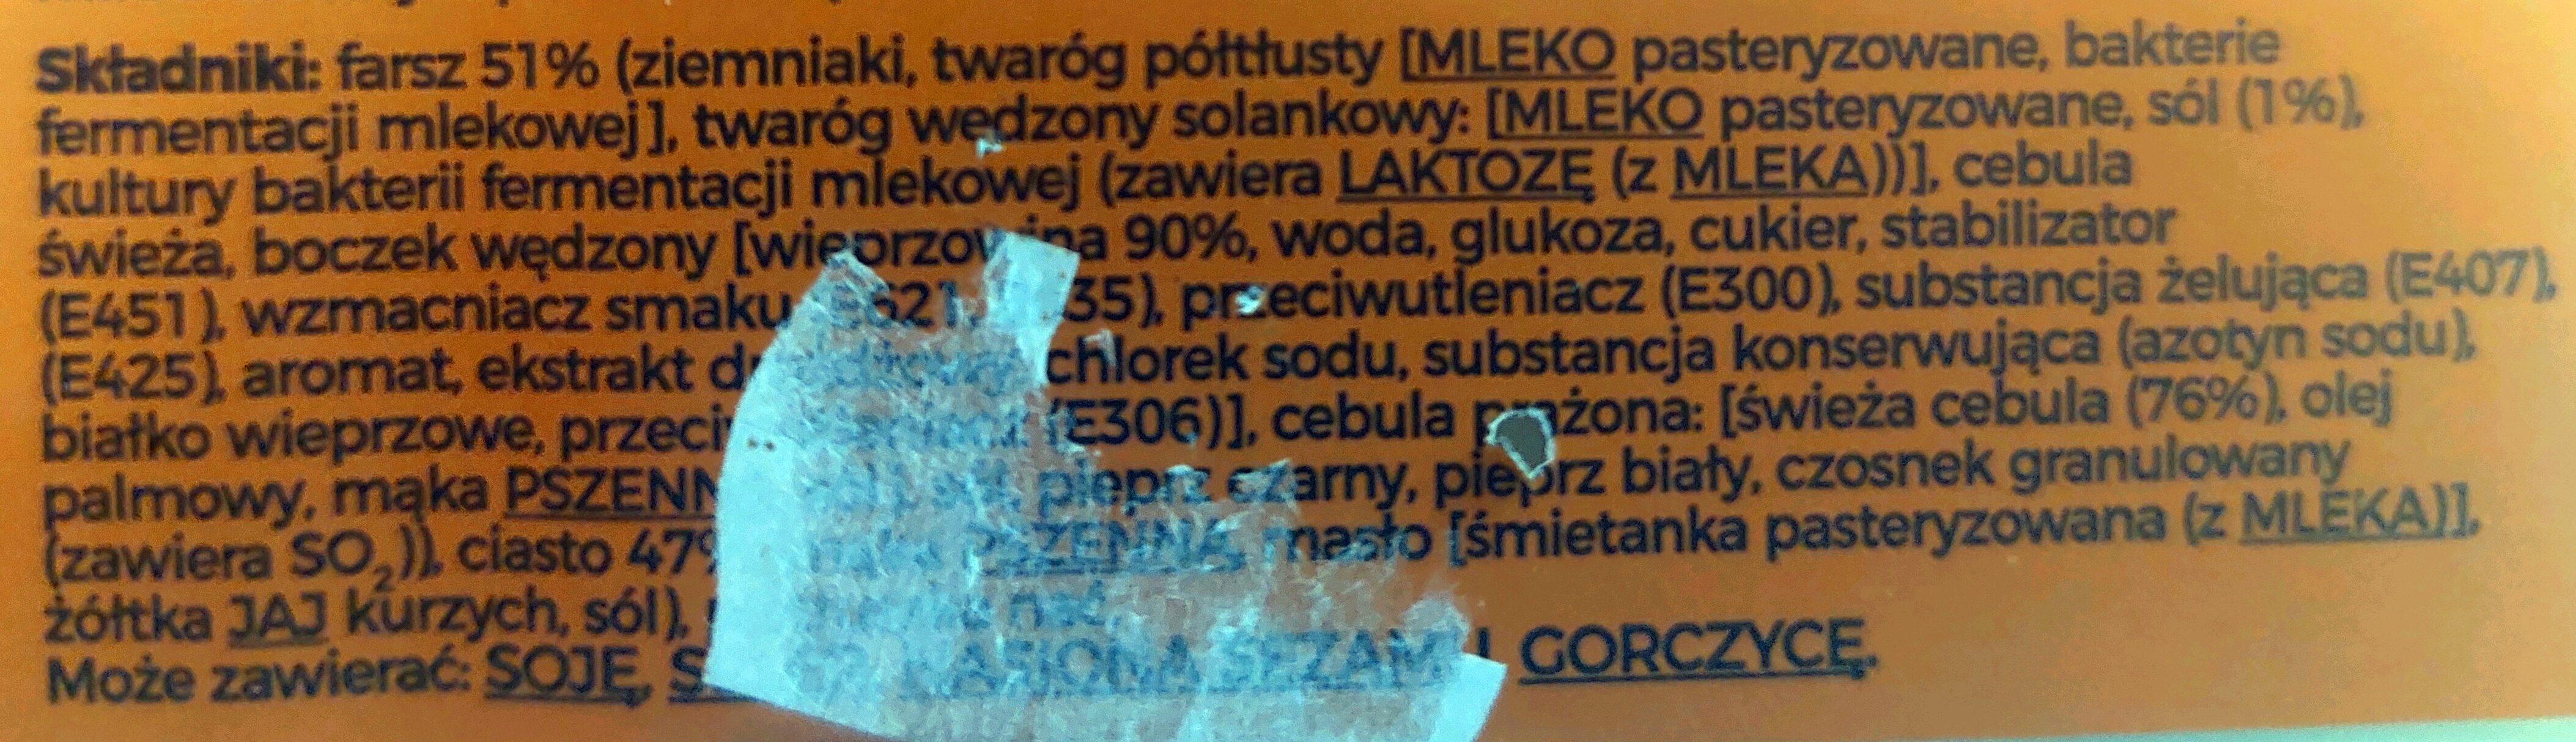 pierogi ruskie - Ingredients - pl